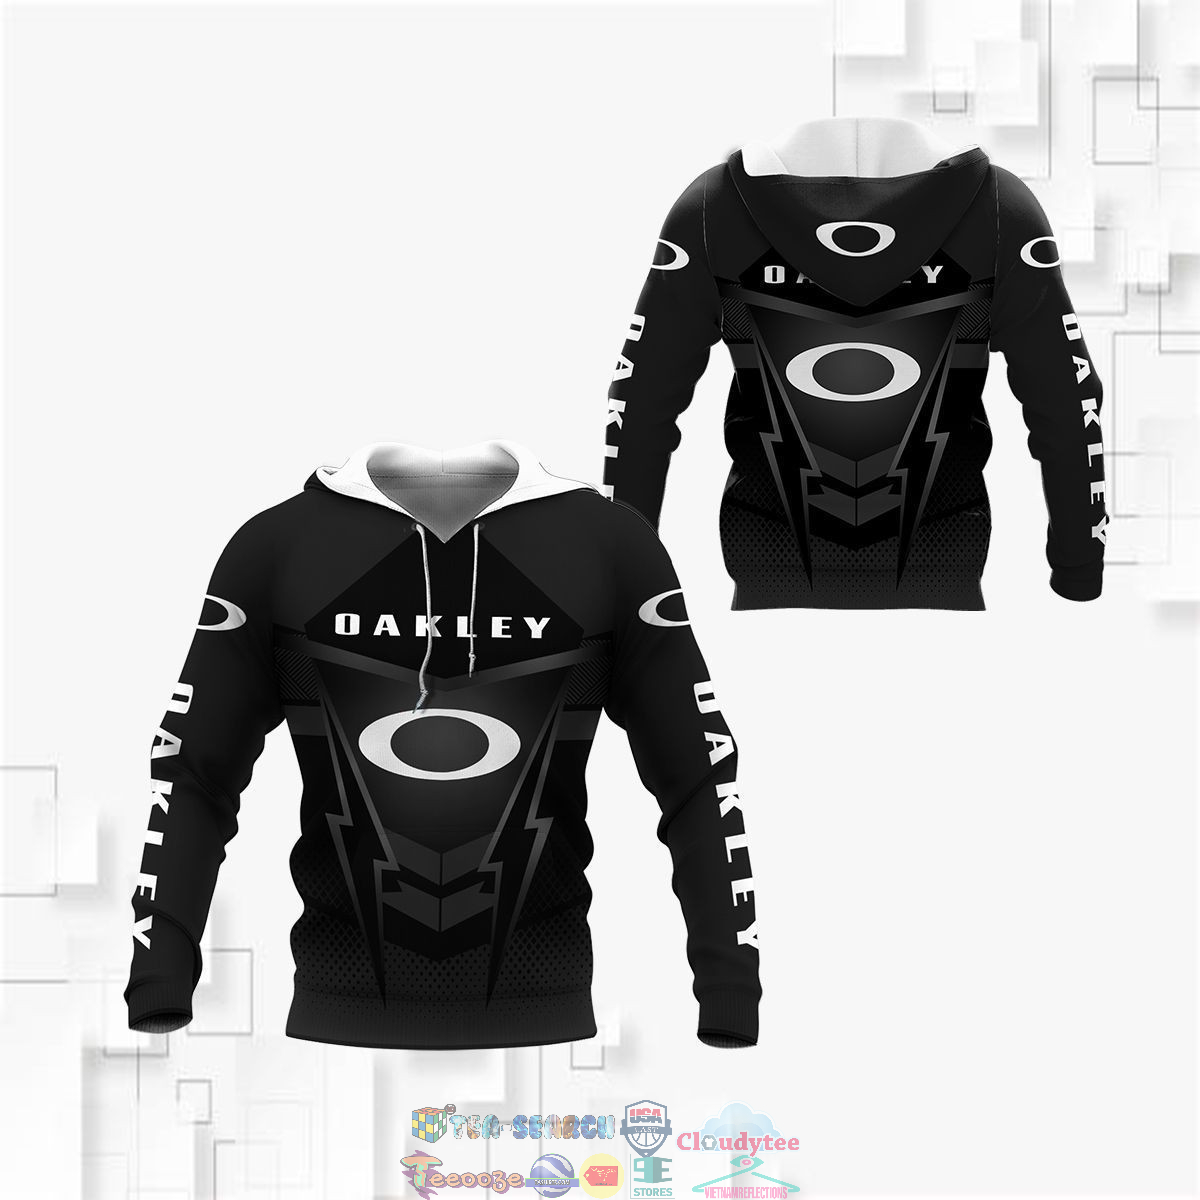 Oakley Black 3D hoodie and t-shirt- Saleoff